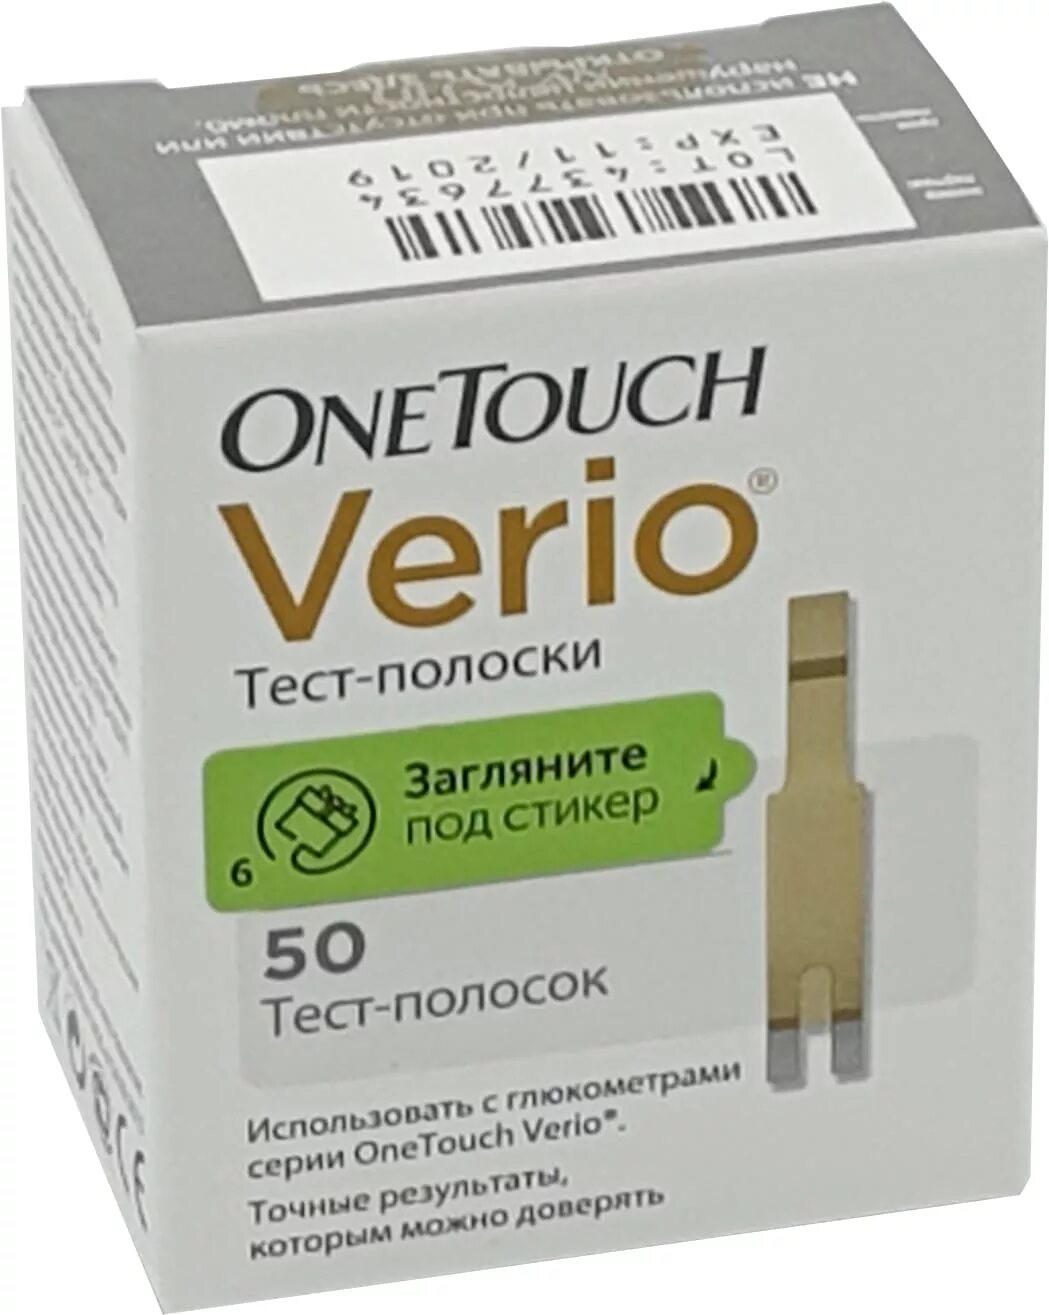 Onetouch verio цены. Уан тач тест-полоски Верио №50 [one Touch]. One Touch Verio 50шт. One Touch Verio reflect тест полоски. Глюкометр Ван тач Верио рефлект.